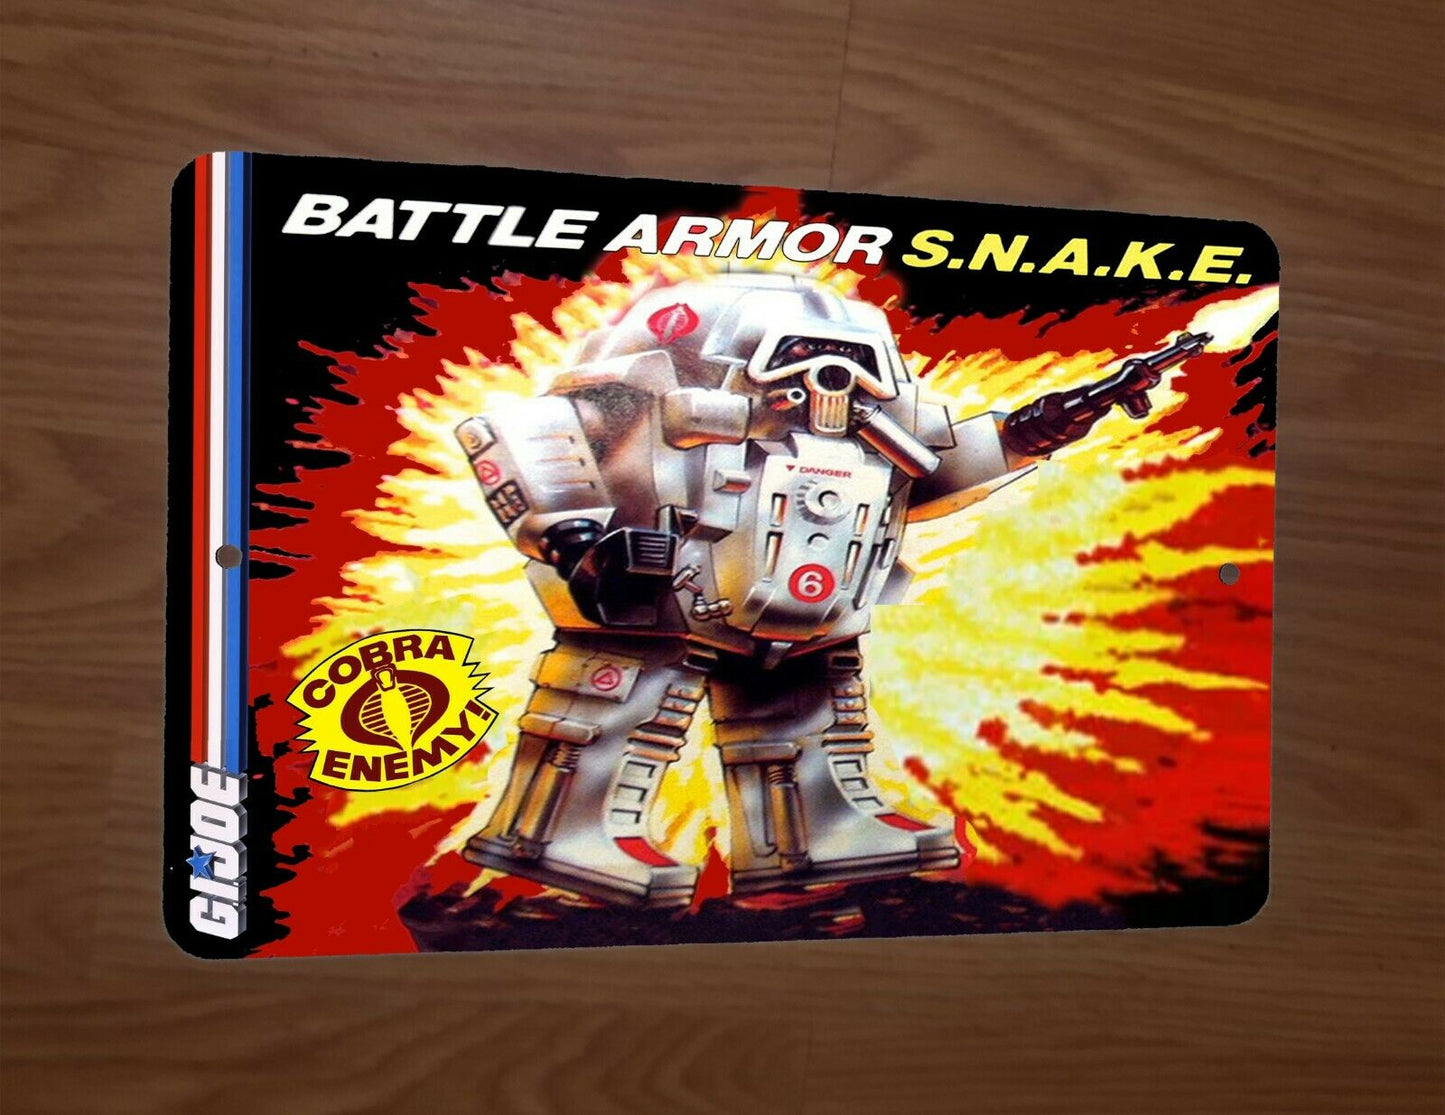 GI Joe Cobra Battle Armor SNAKE Artwork The Enemy 8x12 Metal Wall Sign Retro 80s Cartoon